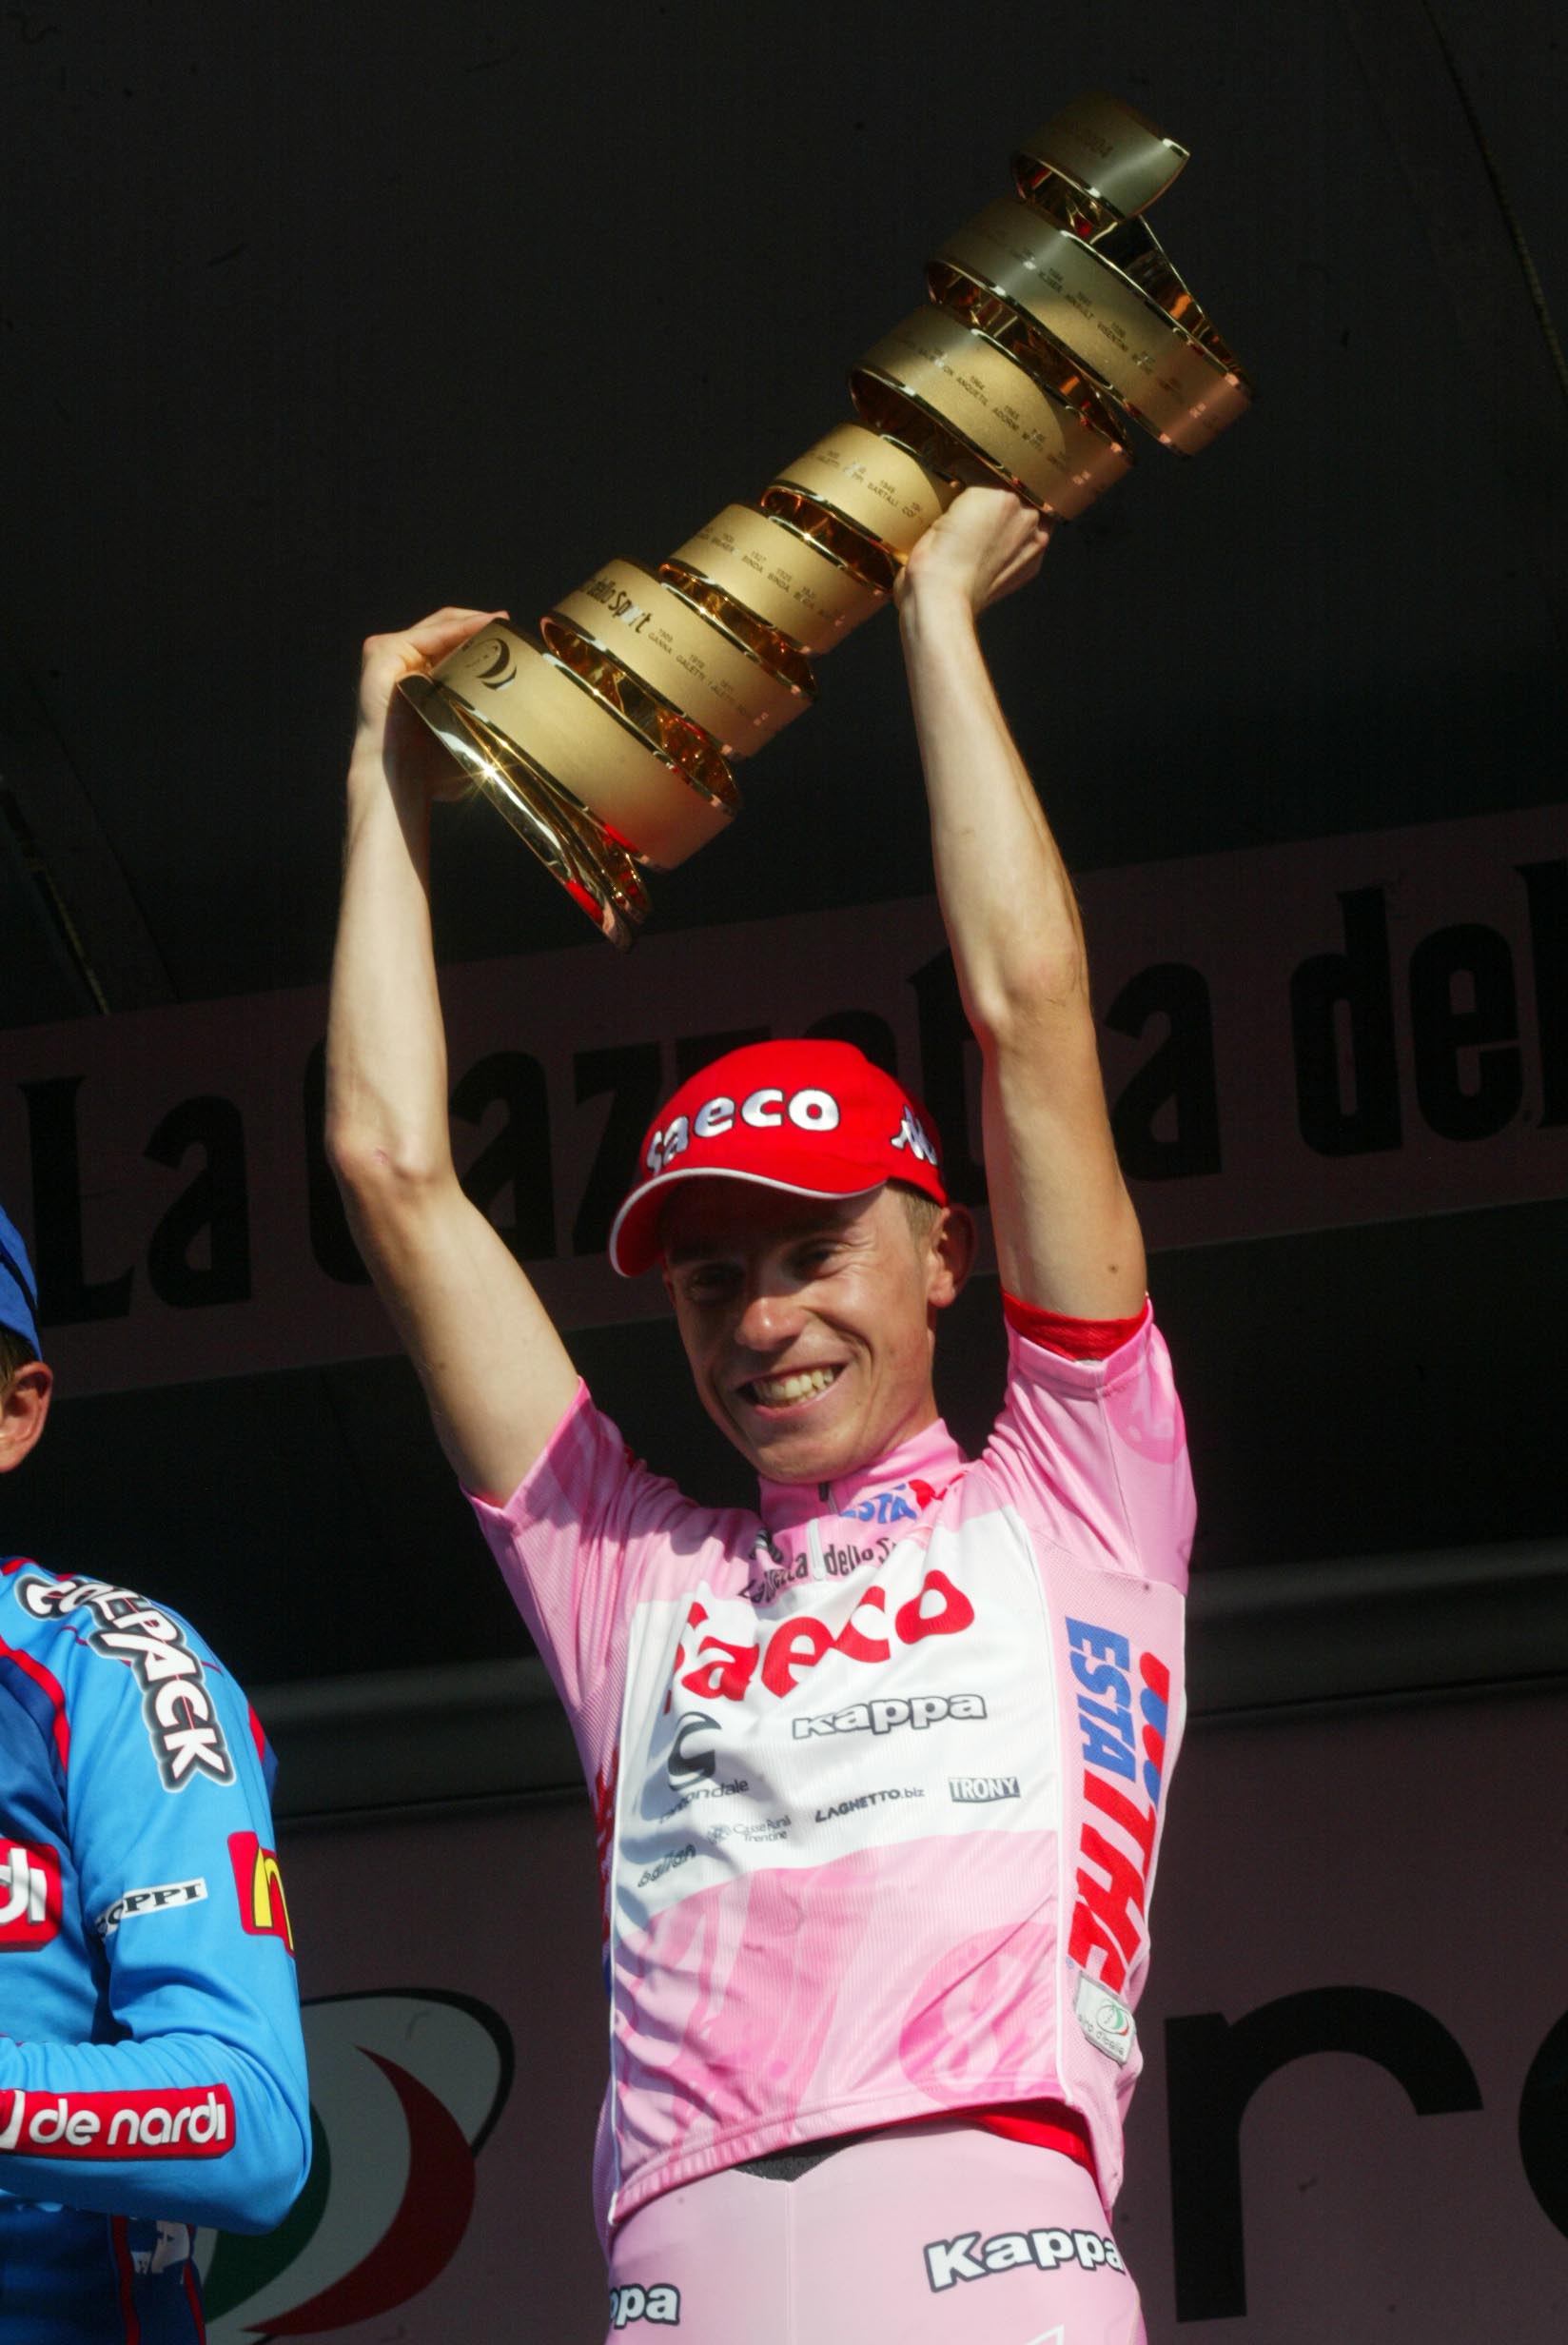 Giro d’Italia 2004 – CUNEGO